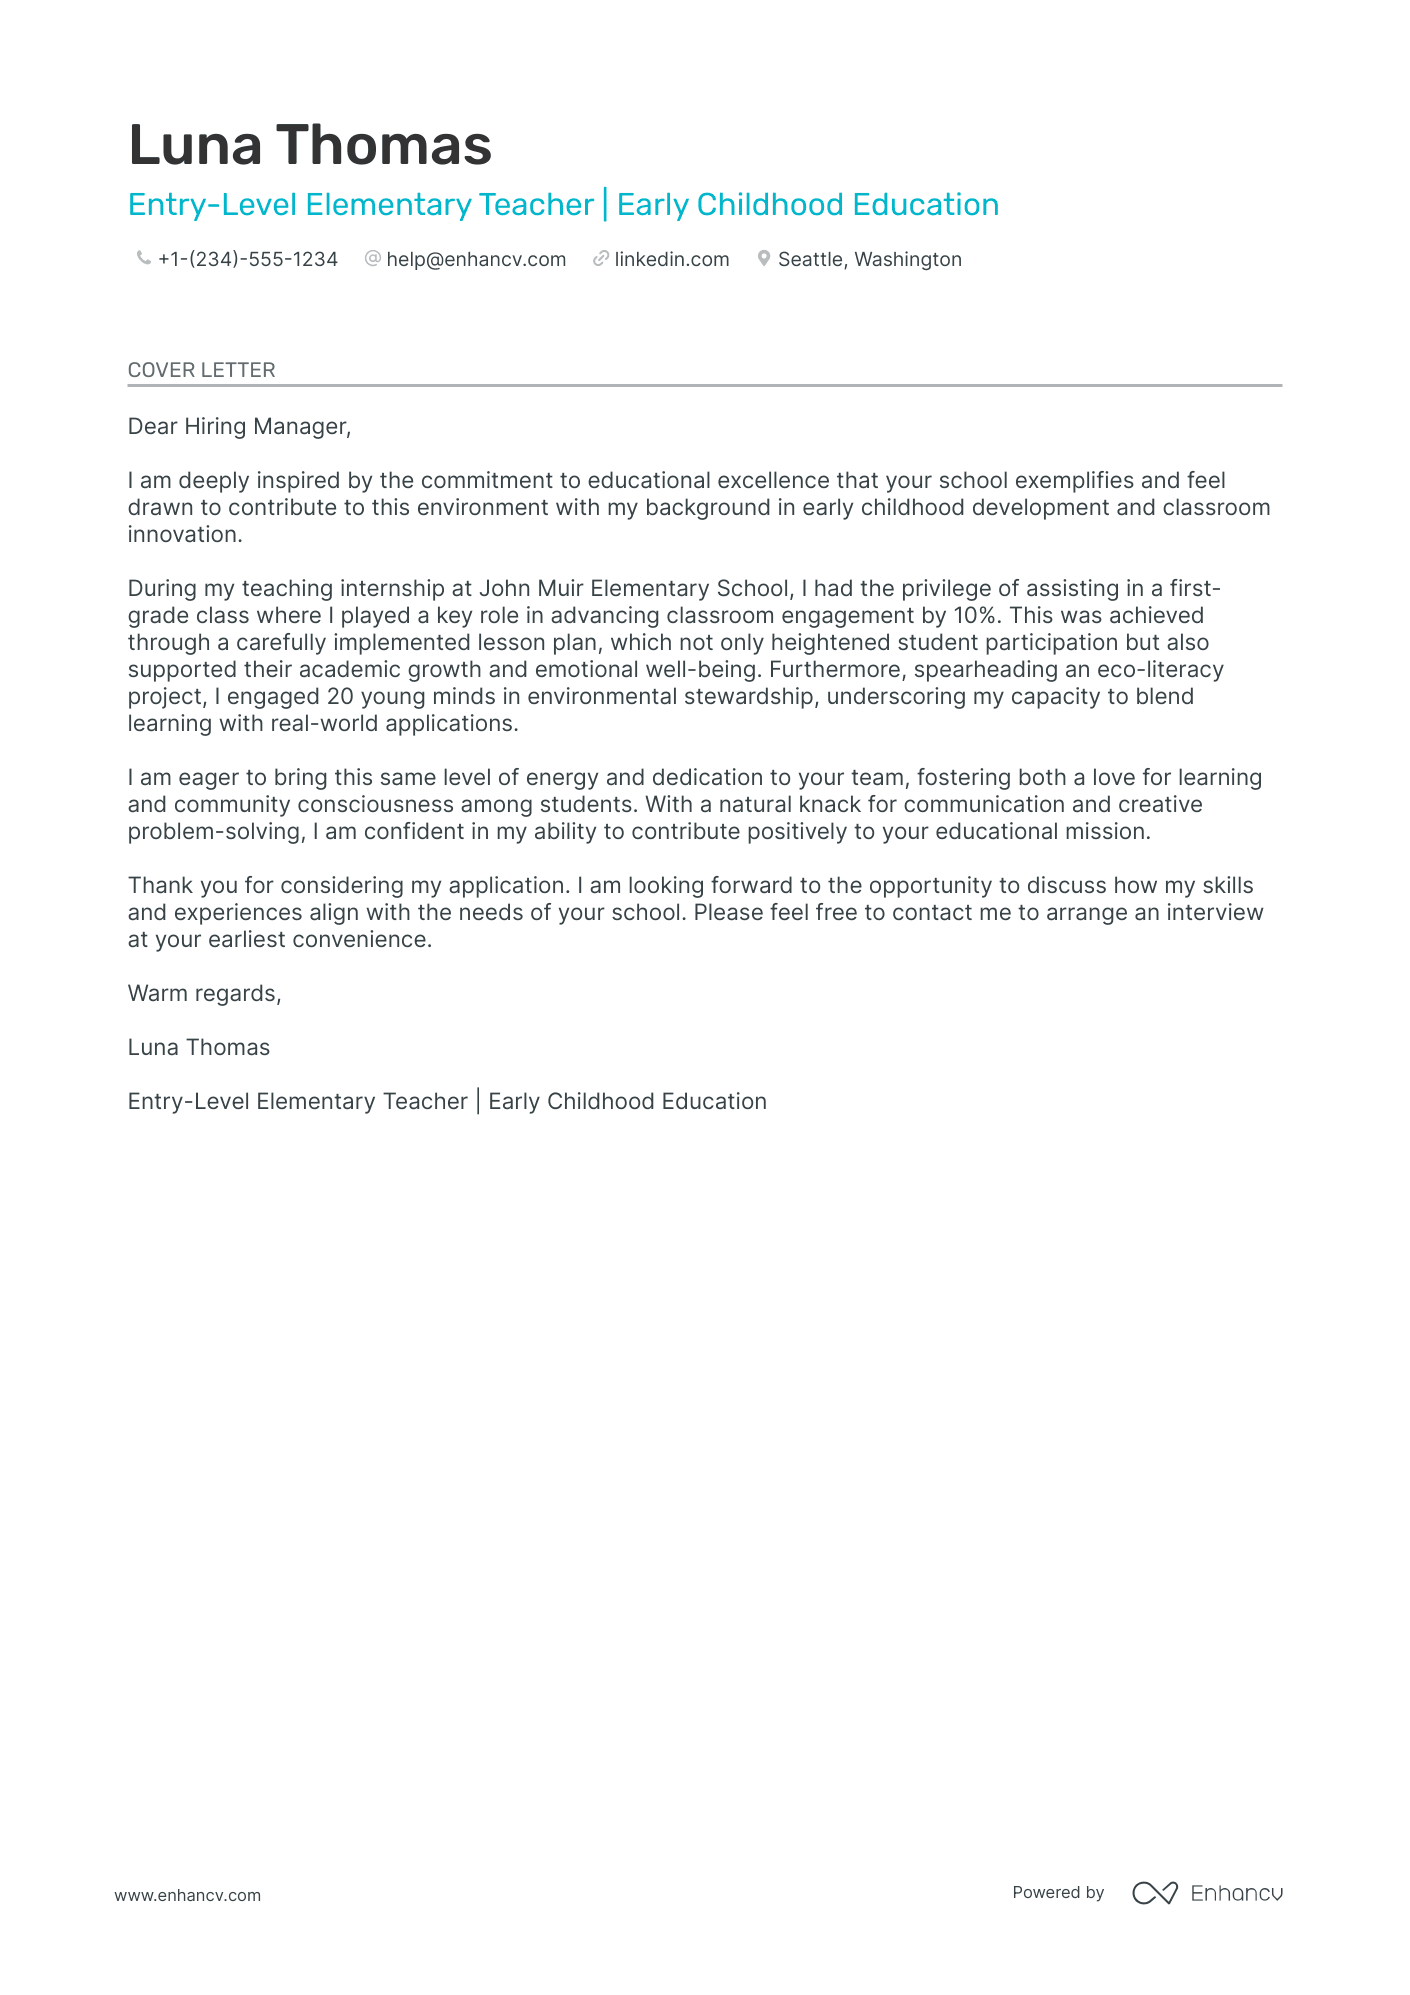 application letter for elementary school